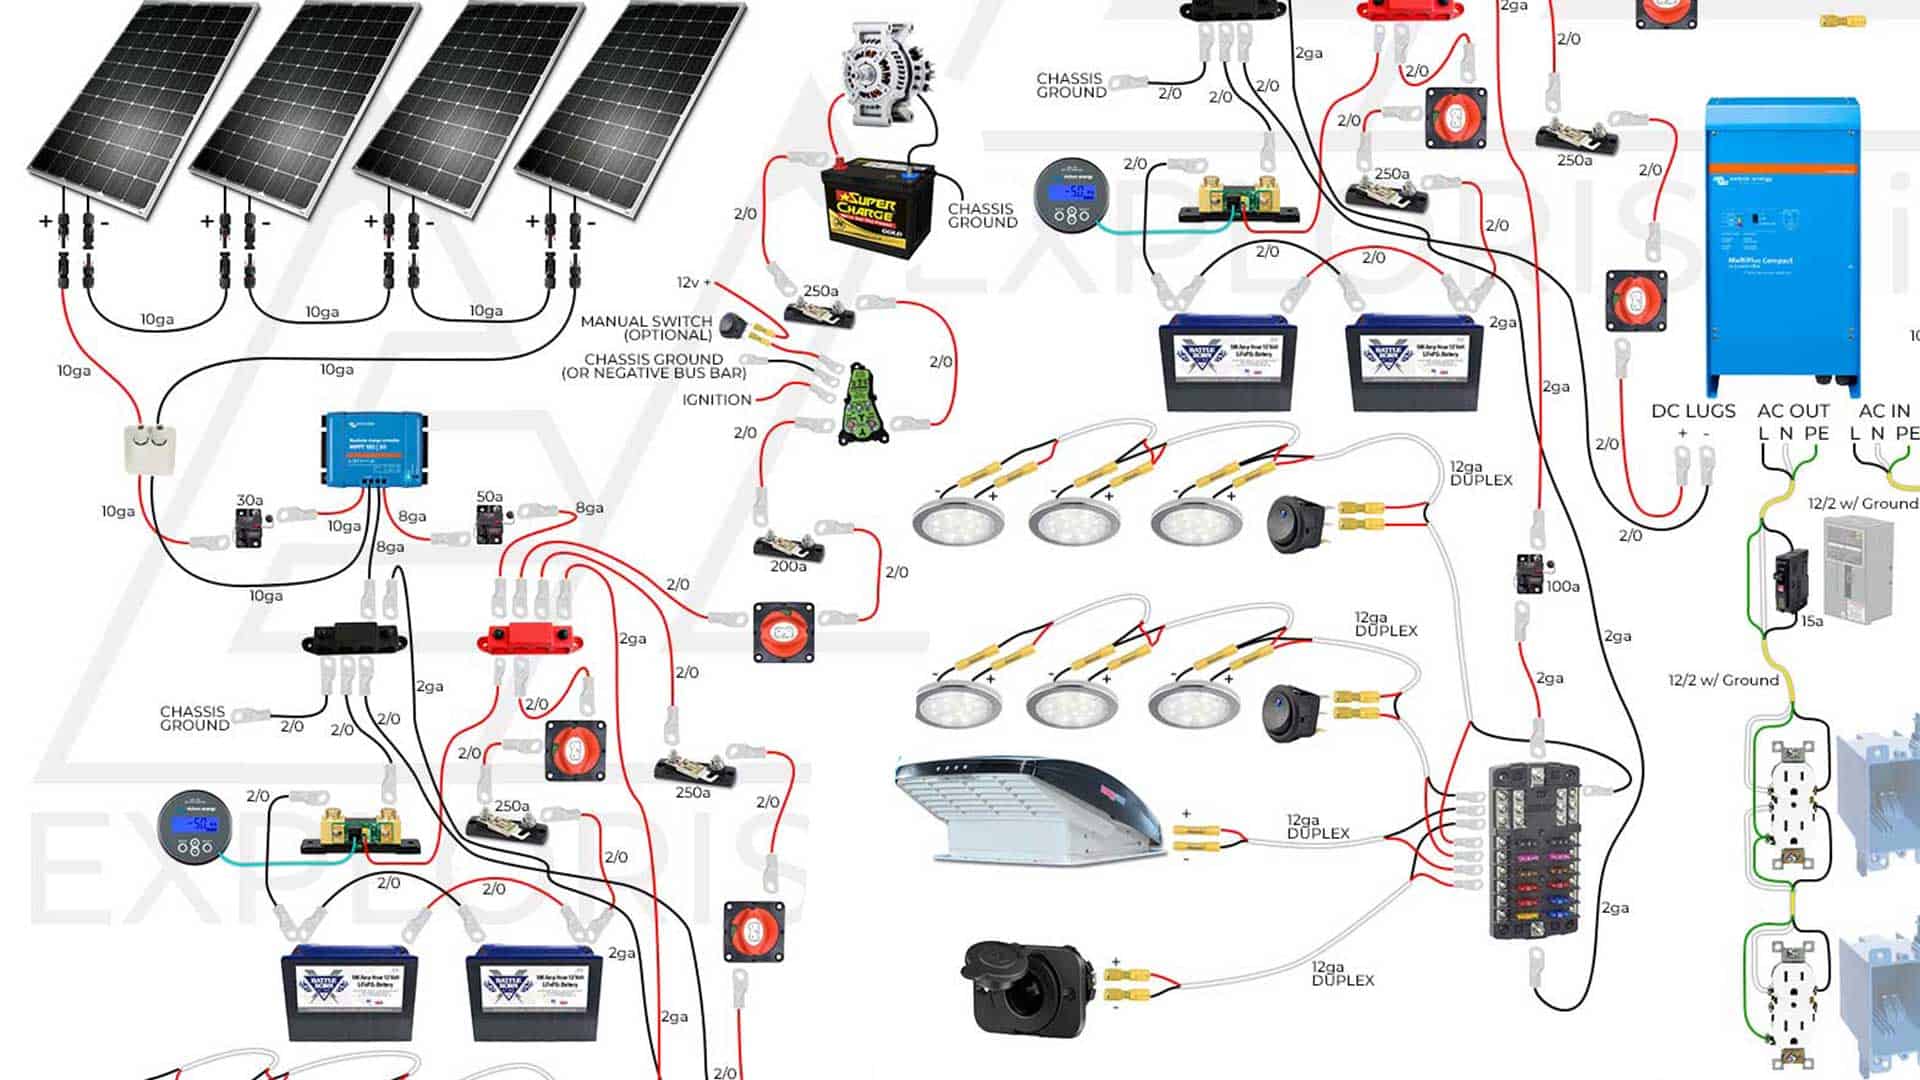 Express Van Wiring Diagram Full Hd Version Wiring Diagram Luiz Diagram Tacchettidiferro It